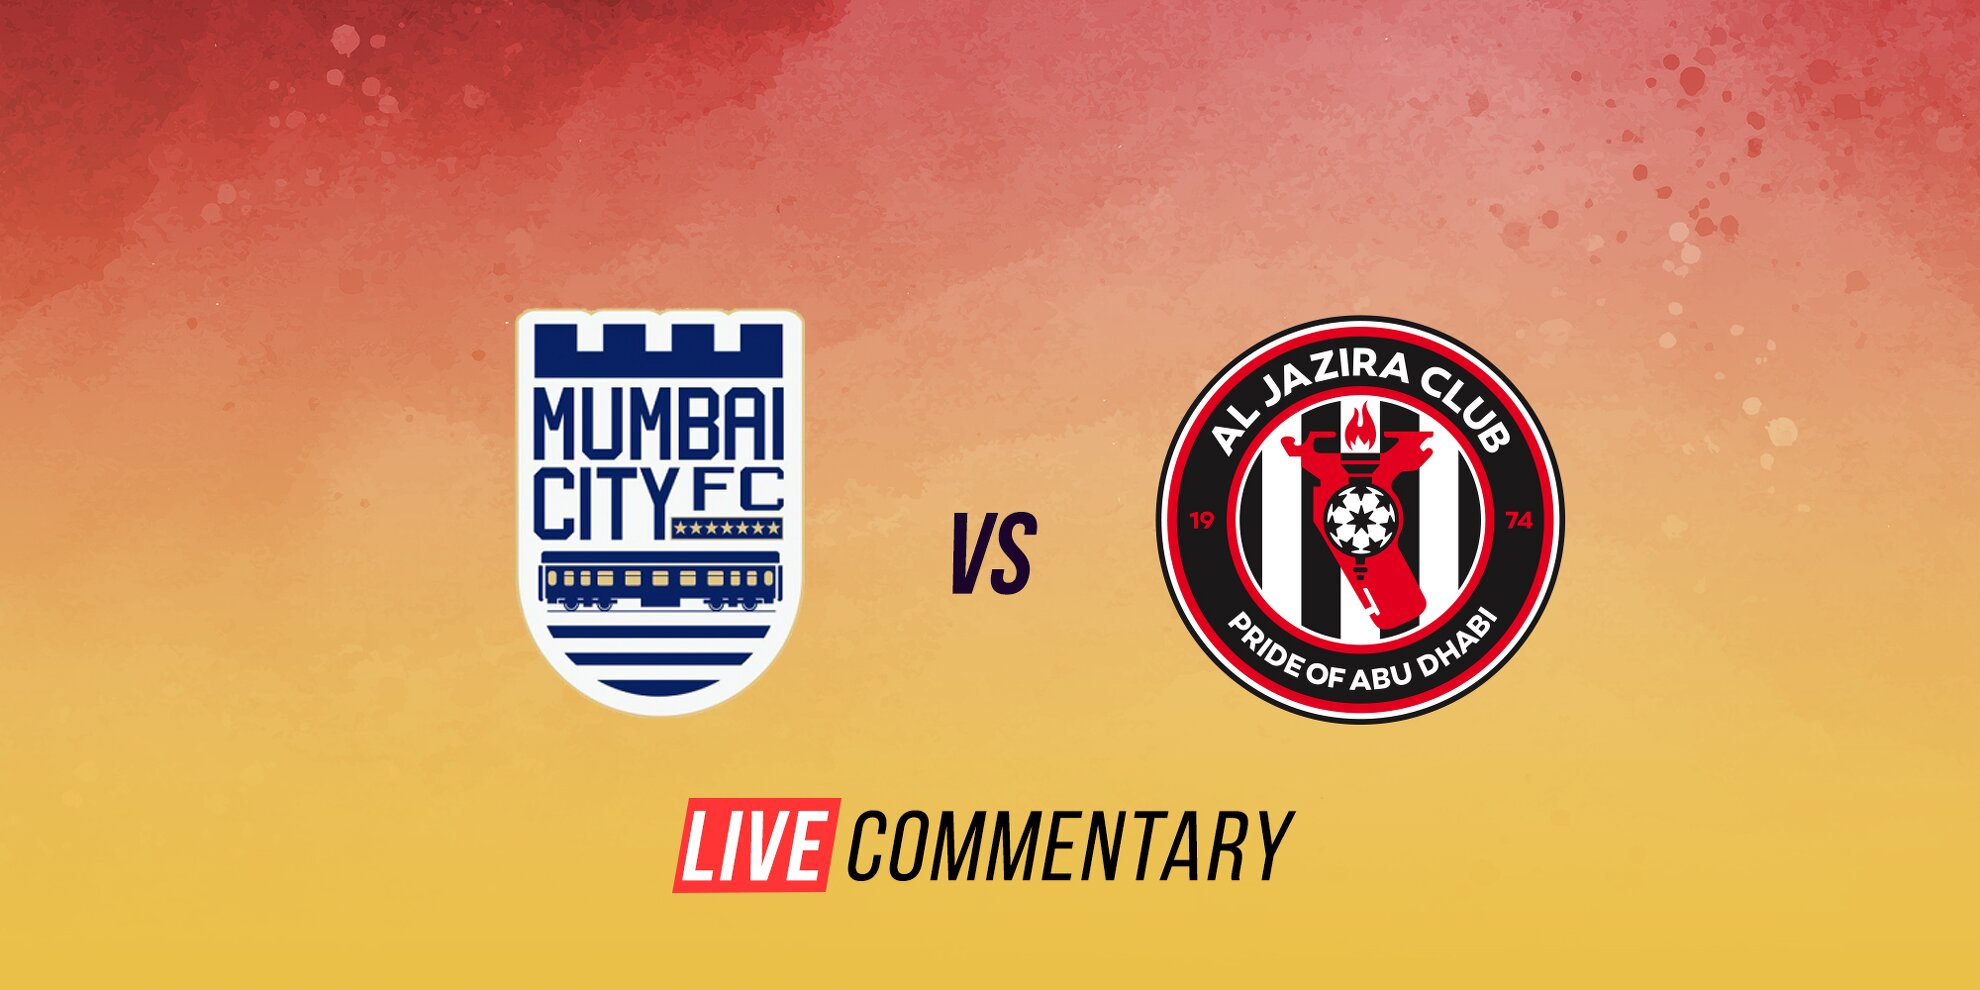 Mumbai City FC vs Al Jazira Live Comm